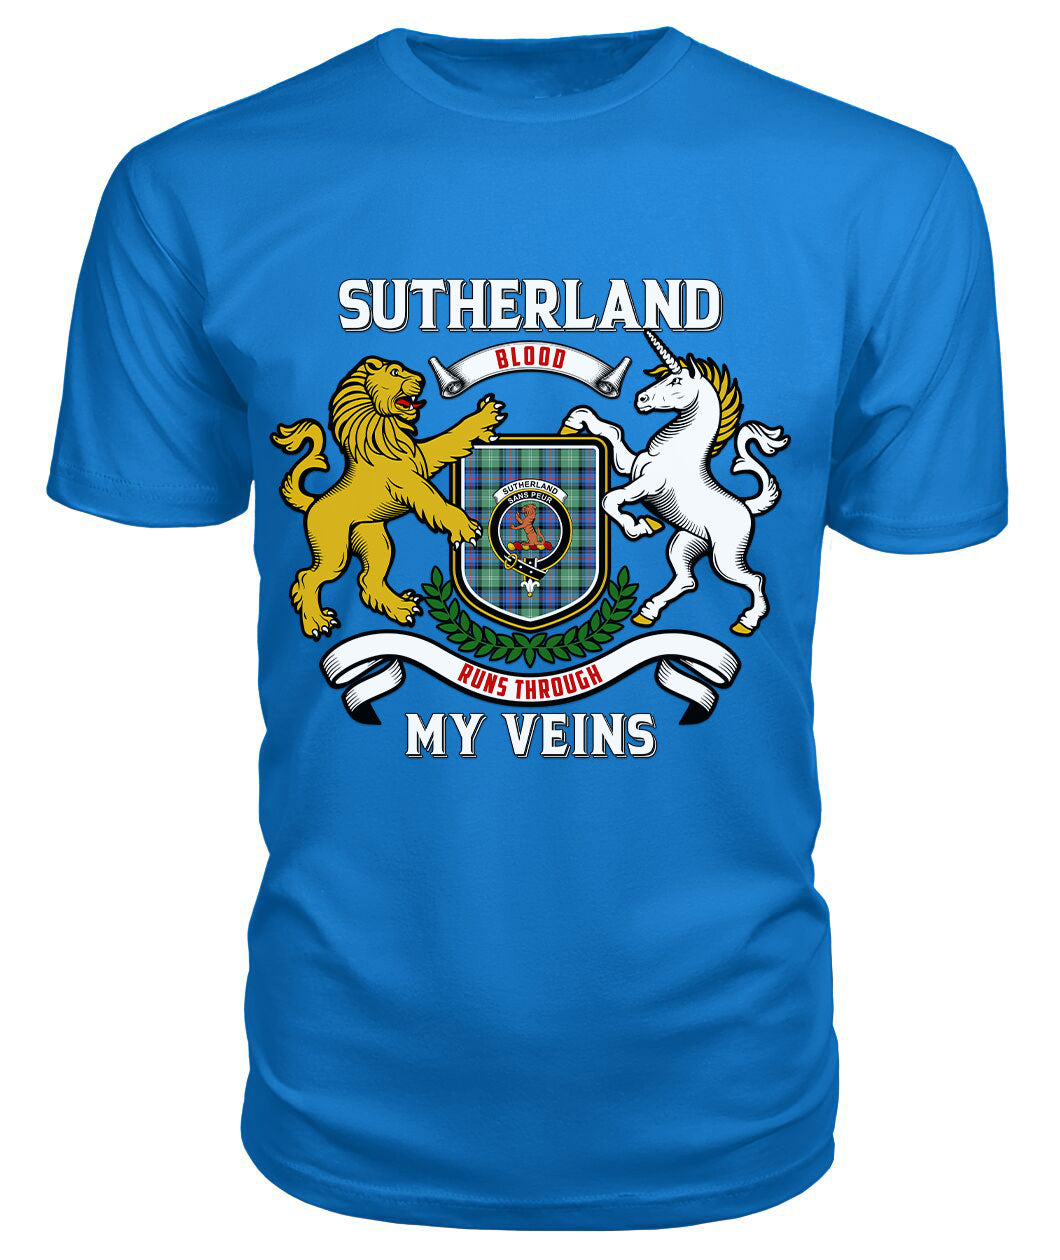 Sutherland Old Ancient Tartan Crest 2D T-shirt - Blood Runs Through My Veins Style